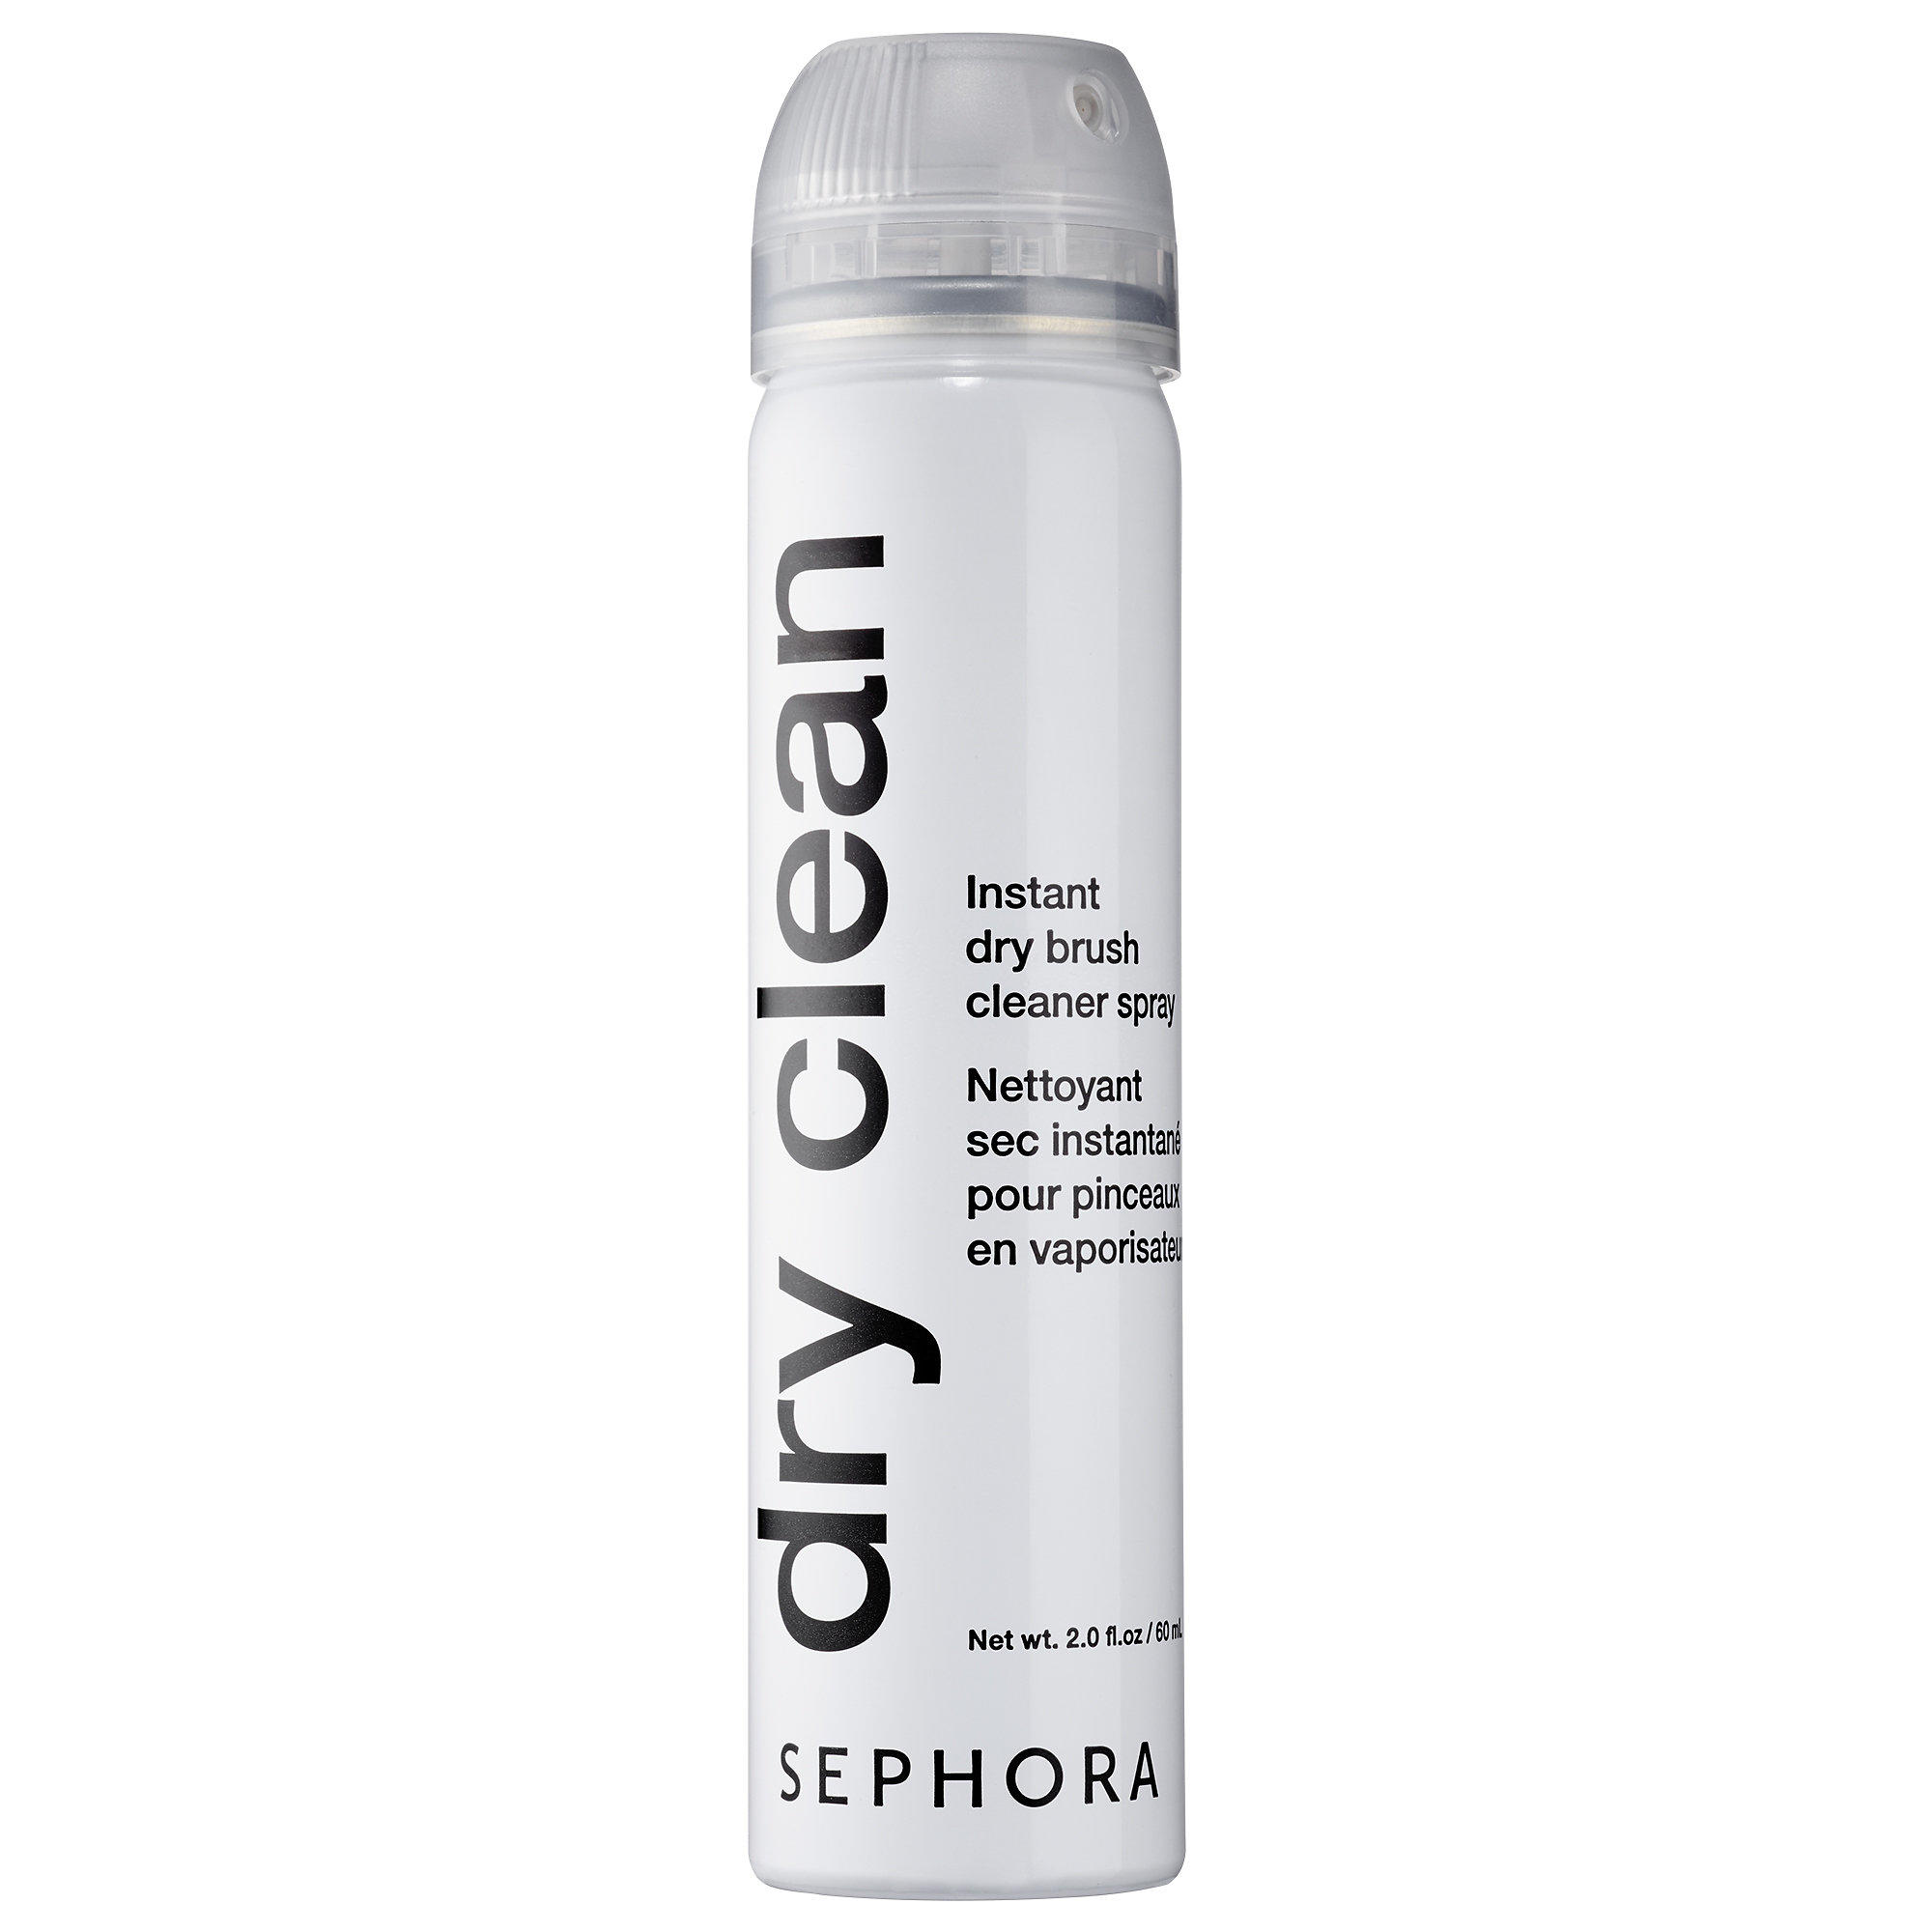 SEPHORA Dry Clean Instant Dry Brush Cleaner Spray